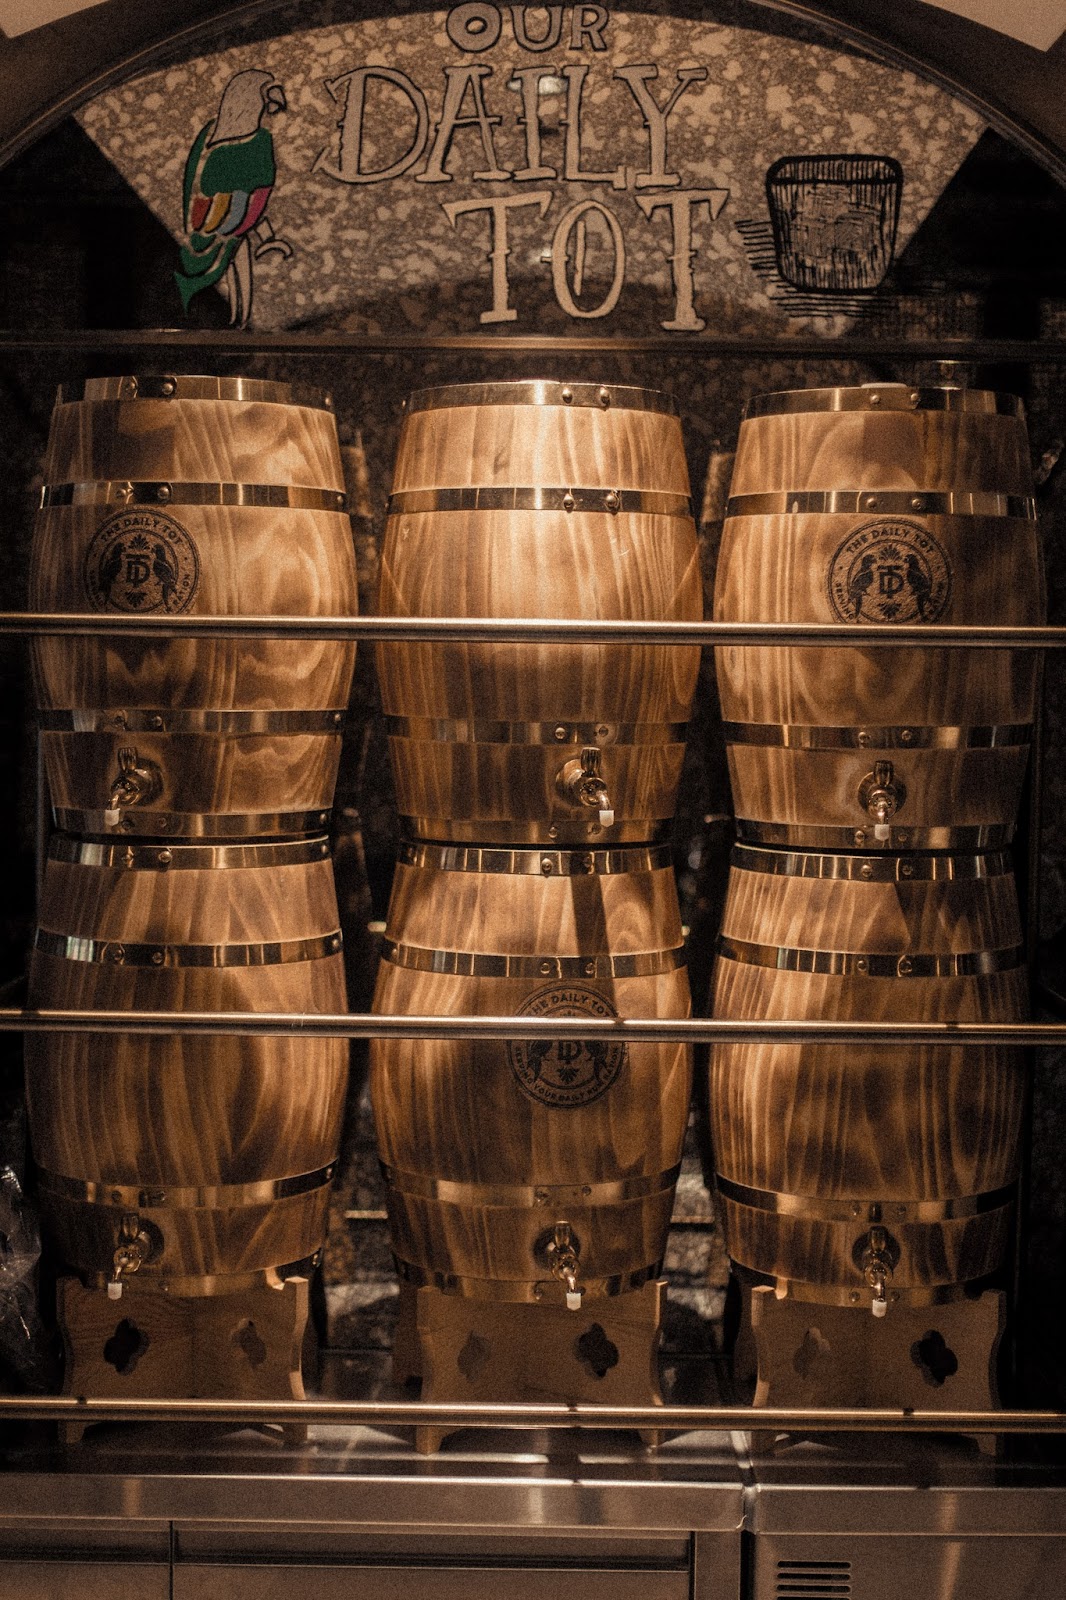 rum casks in Hong Kong's The Daily Tot